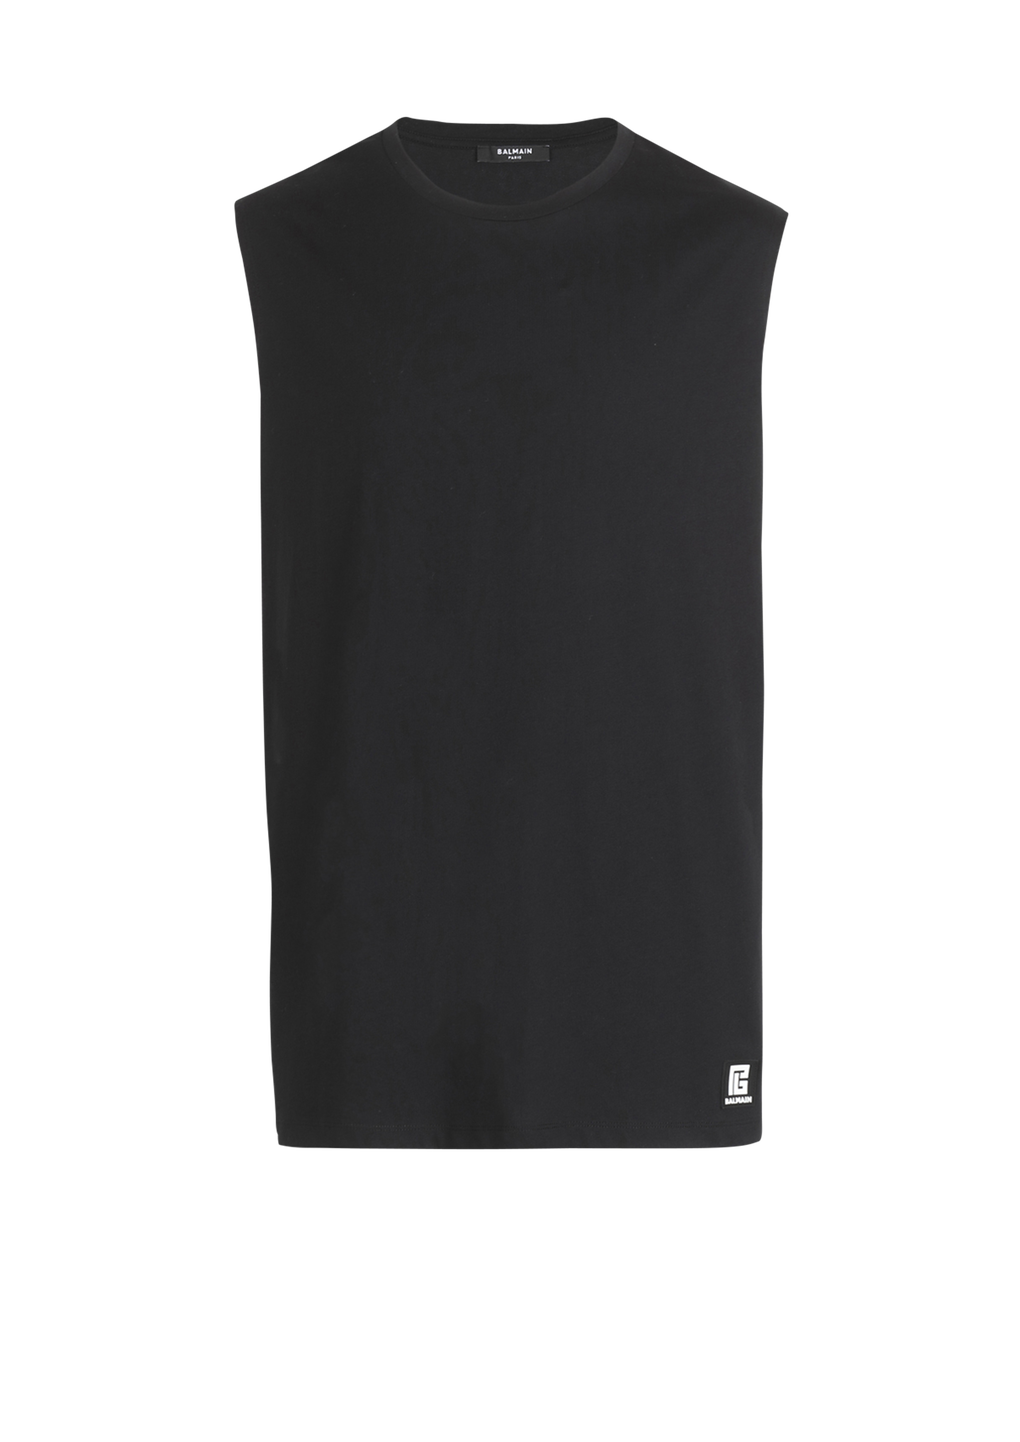 T-shirt en coton imprimé logo Balmain, noir, hi-res